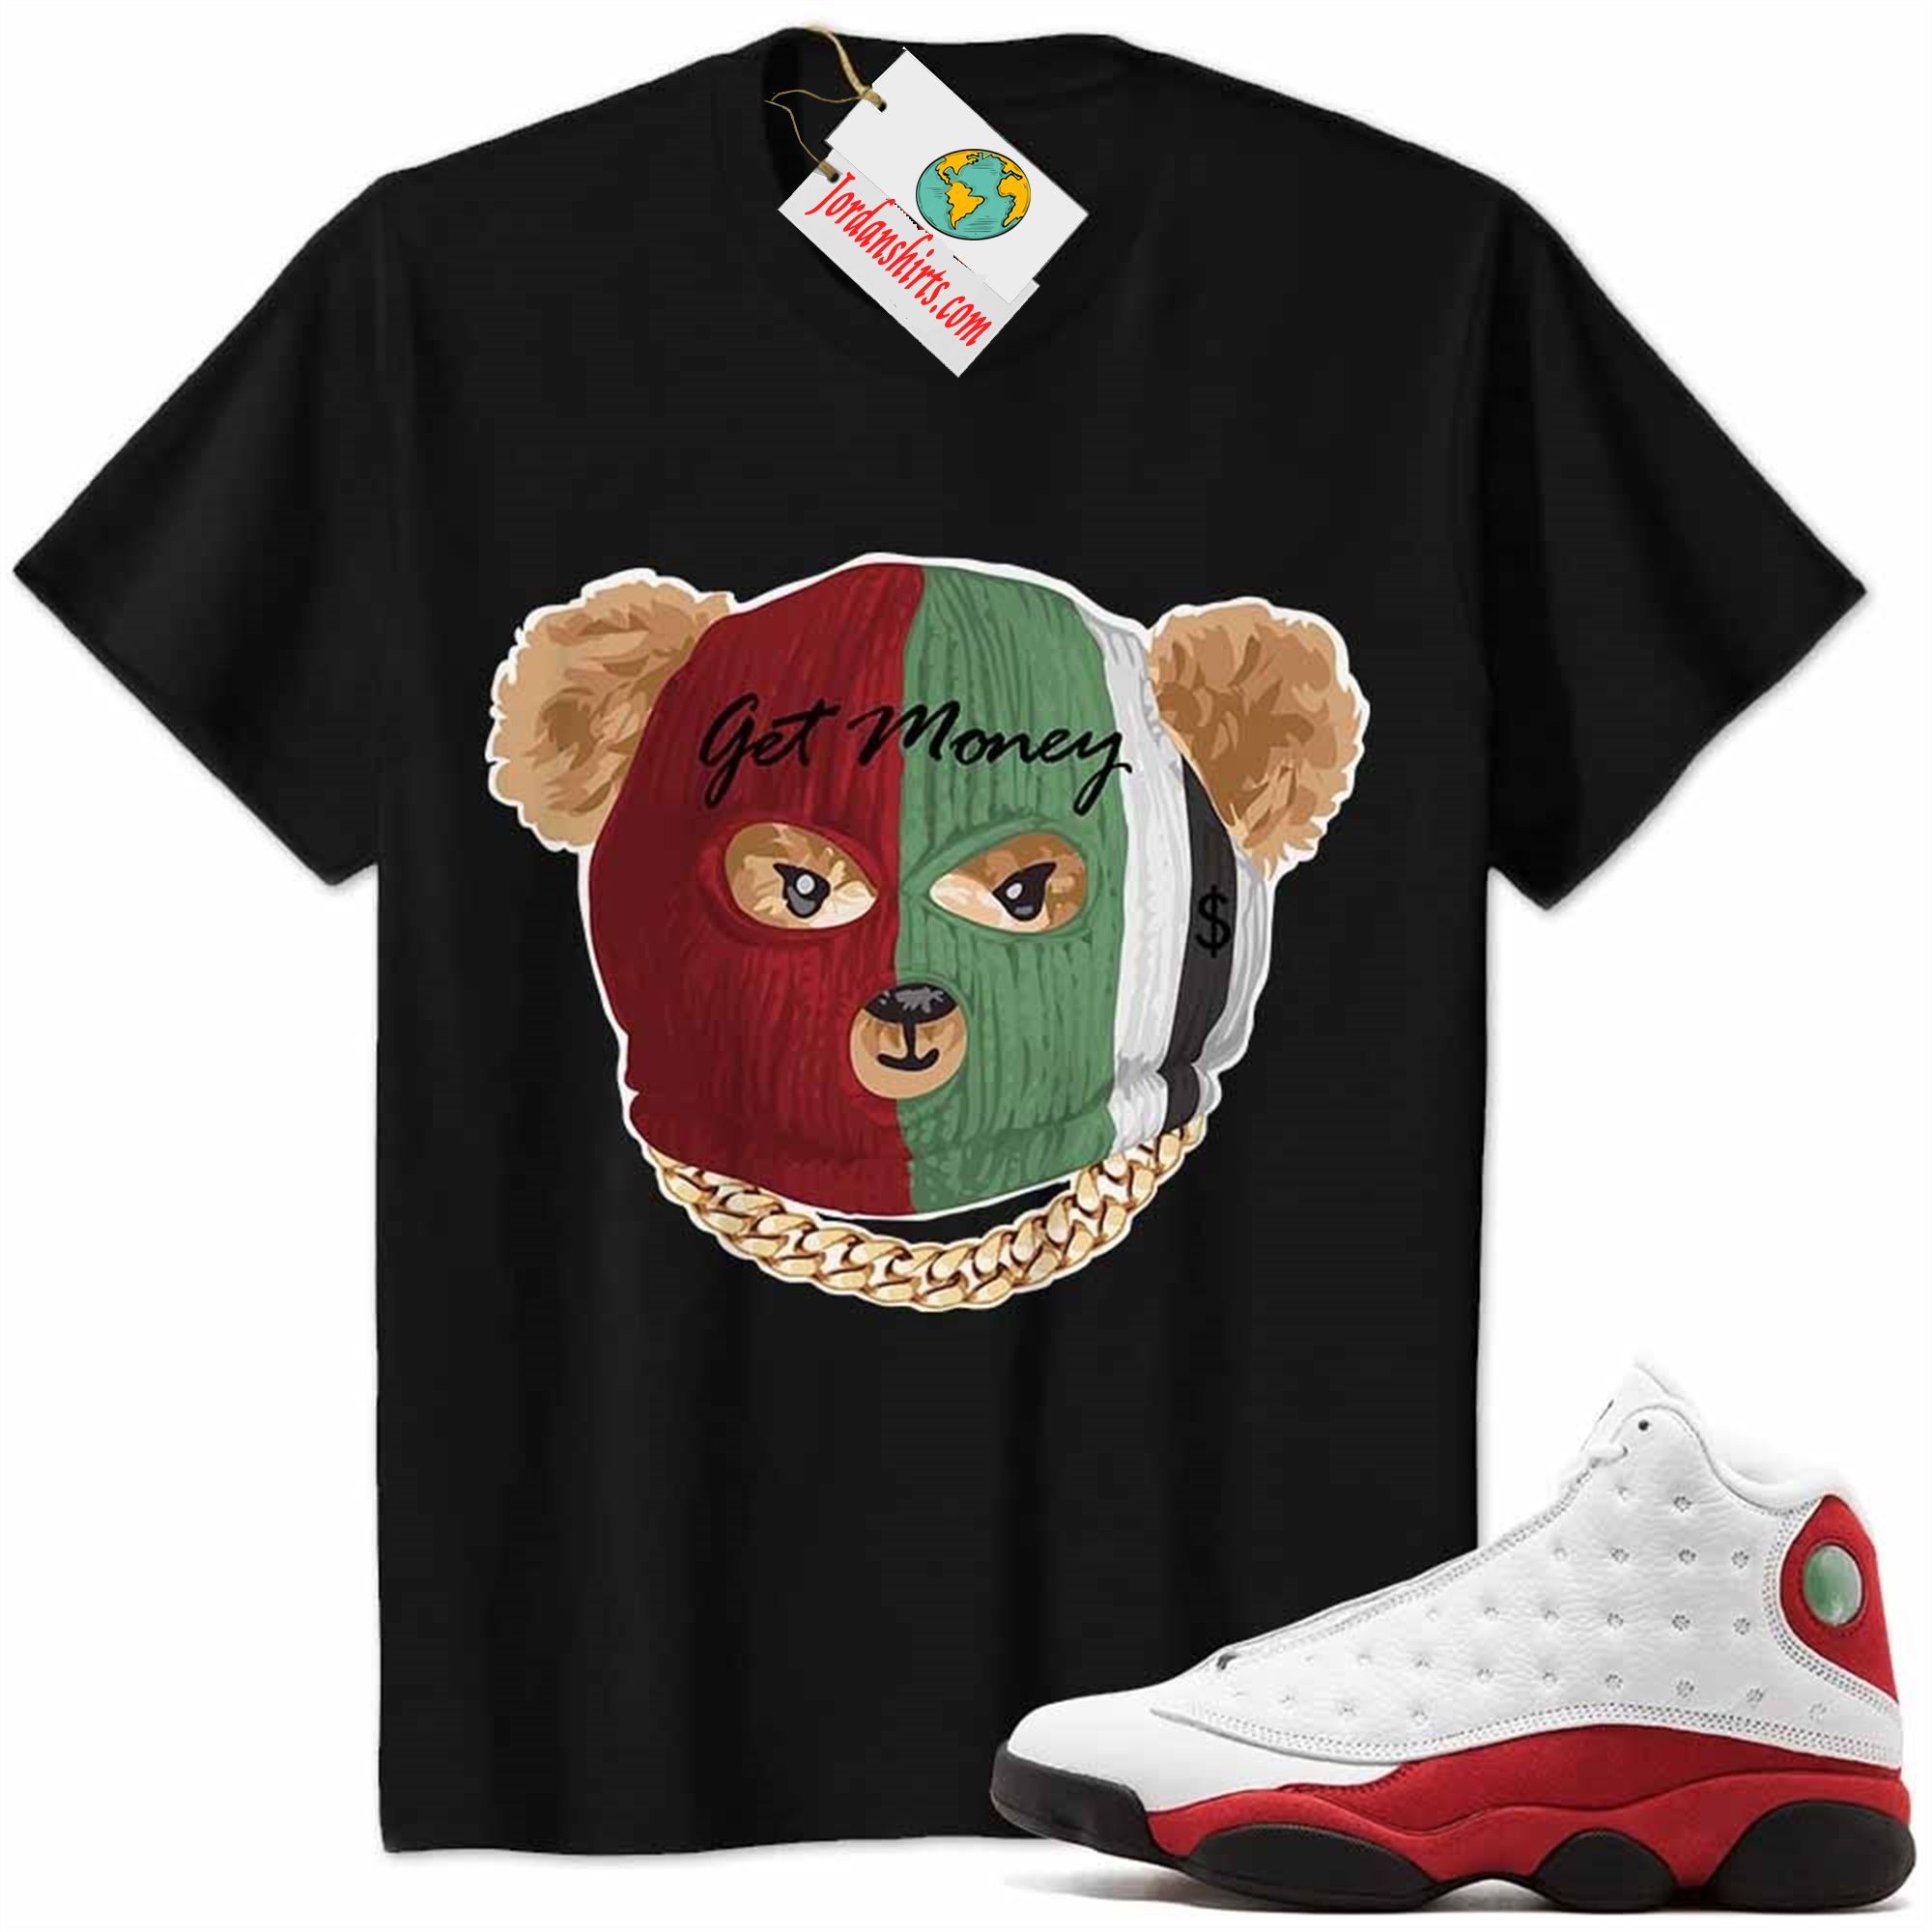 Jordan 13 Shirt, Robber Teddy Get Money Ski Mask Black Air Jordan 13 Chicago 13s Plus Size Up To 5xl